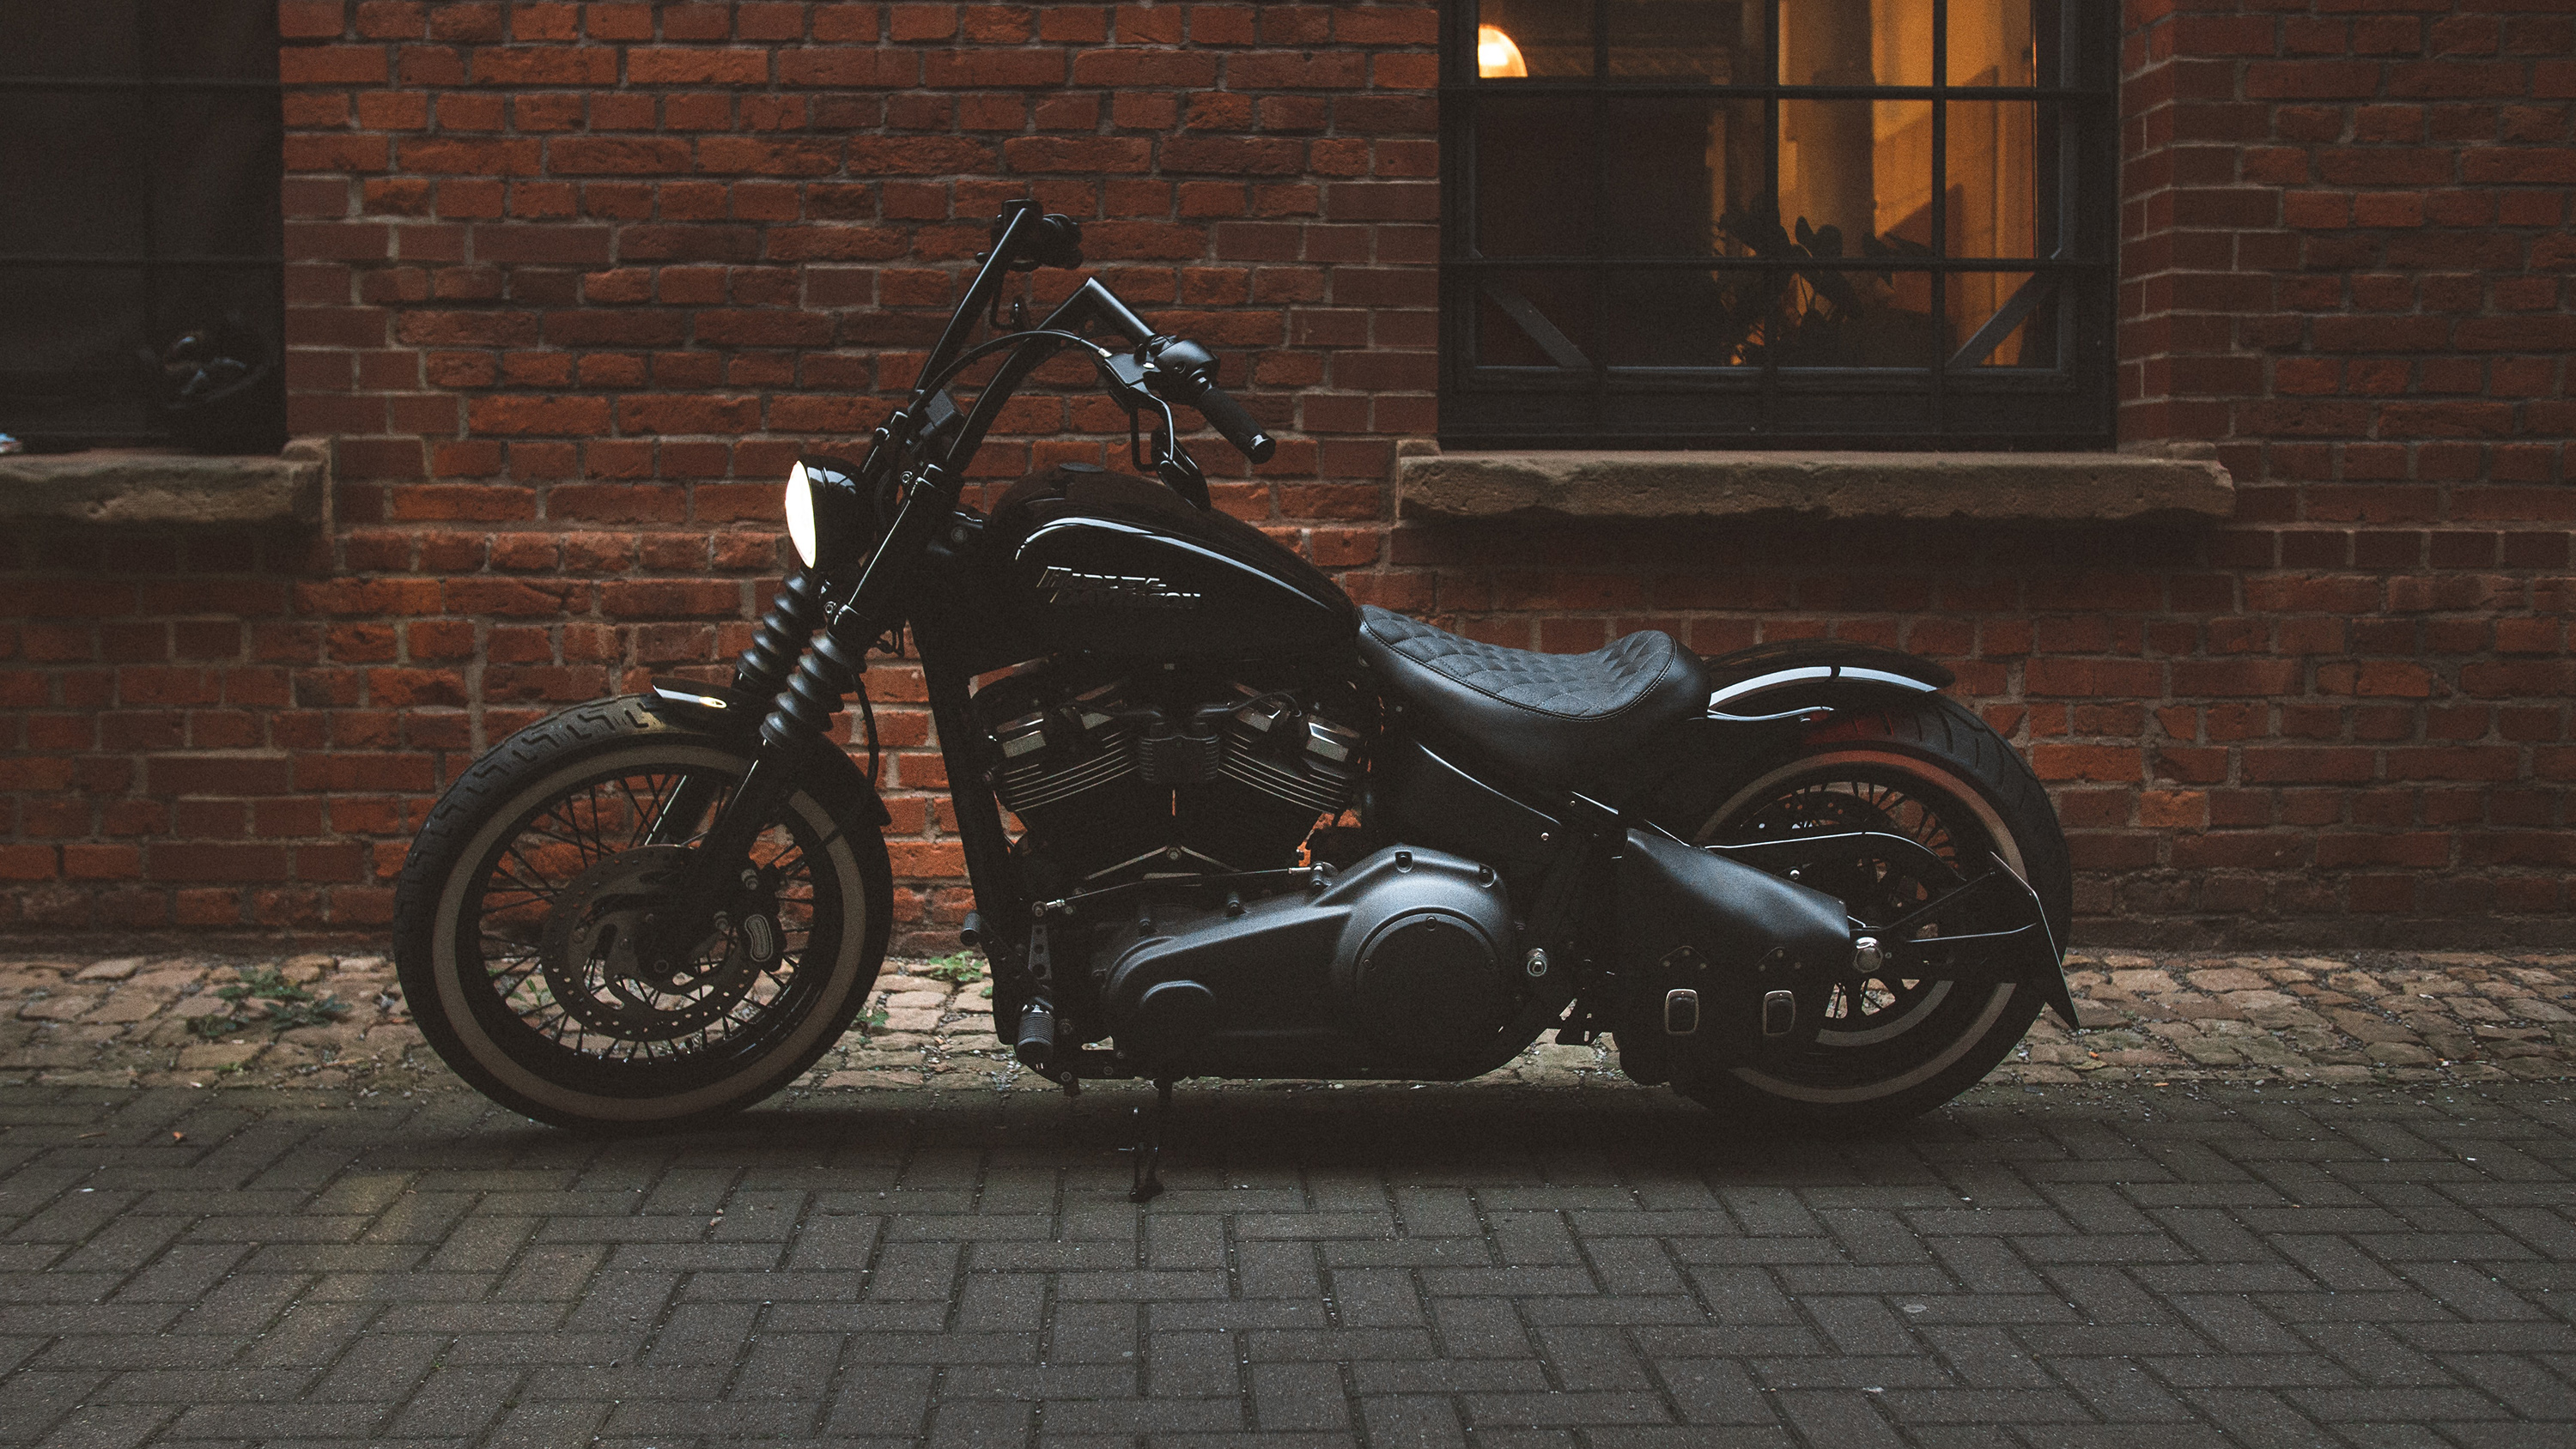 General 3000x1688 motorcycle vehicle Harley-Davidson black motorcycles American motorcycles